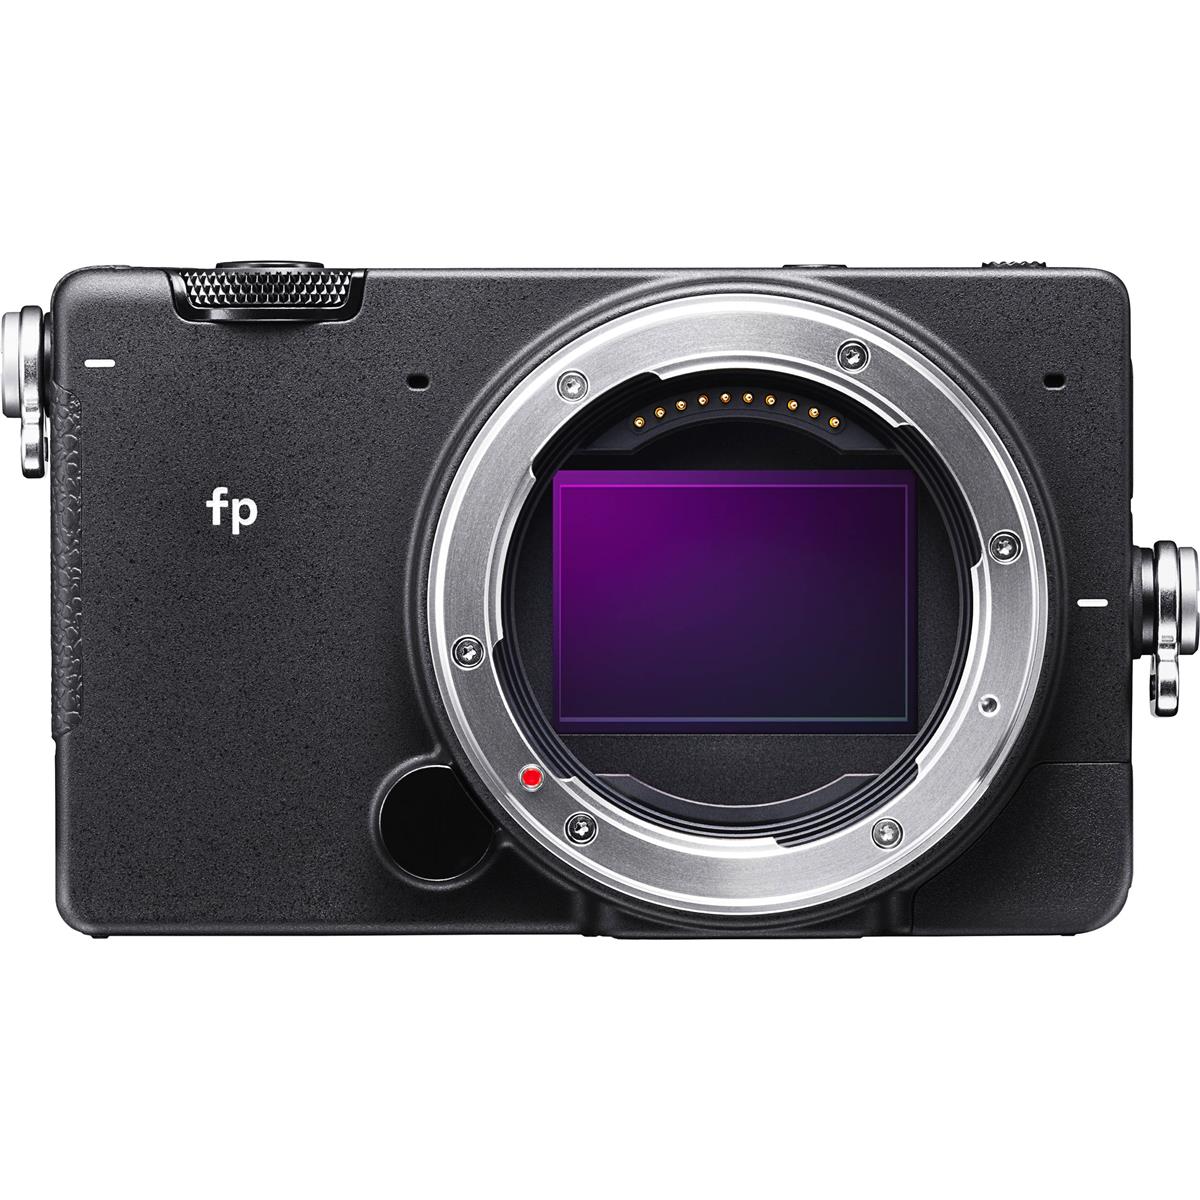 Image of Sigma fp Mirrorless Camera